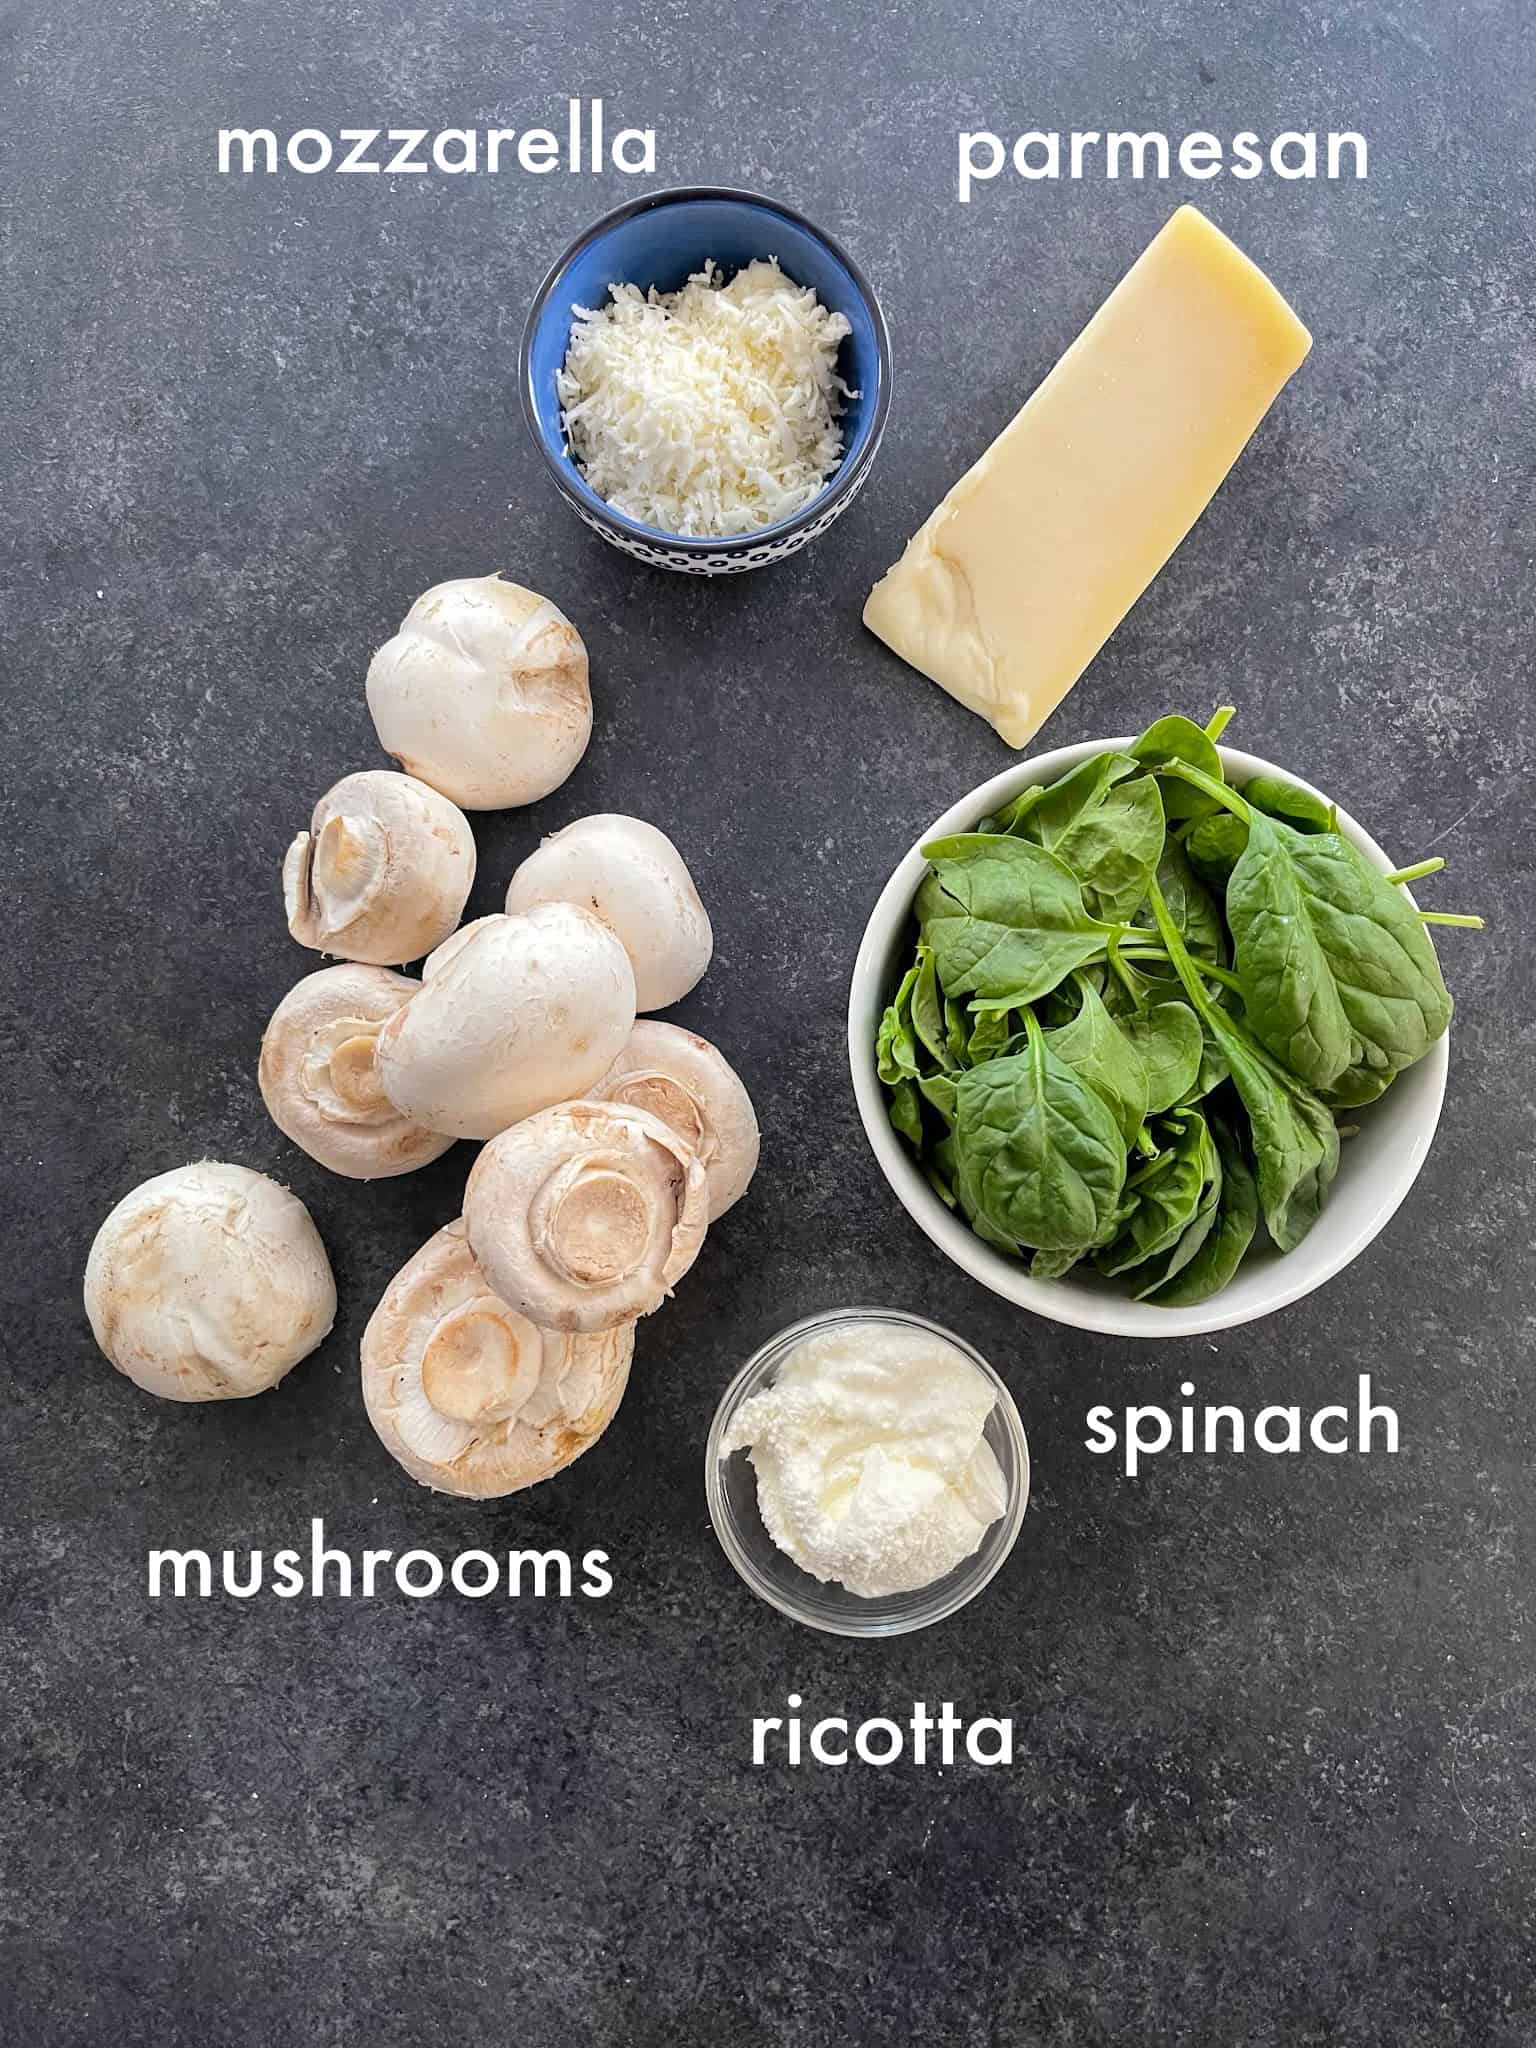 To make this recipe you need mushrooms, parmesan, mozzarella, ricotta and spinach. 